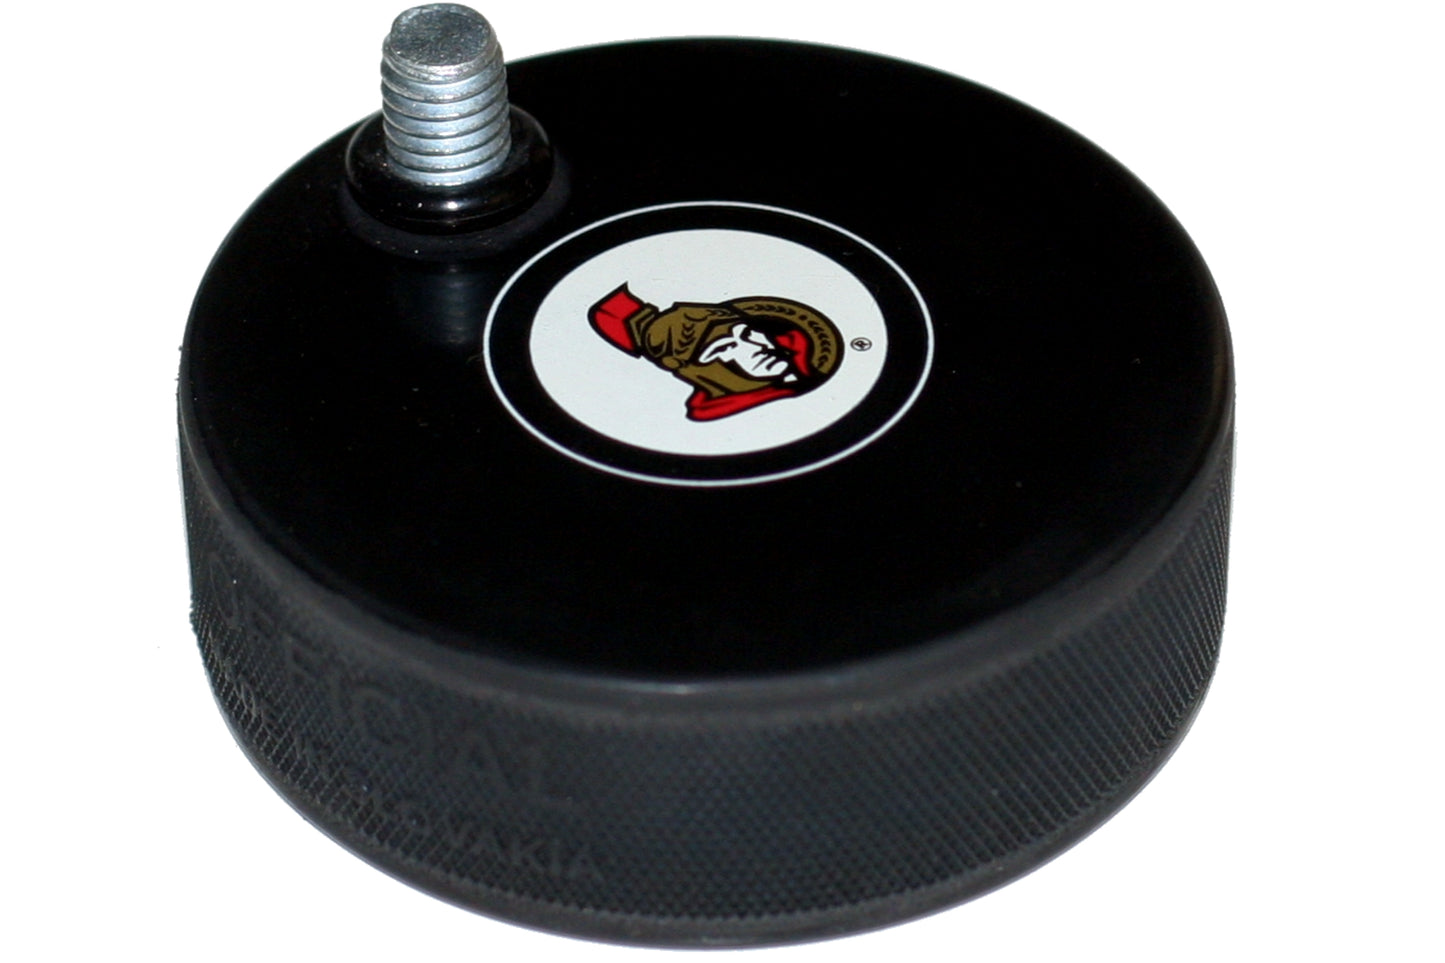 Ottawa Senators Hockey Puck Beer Tap Handle Display